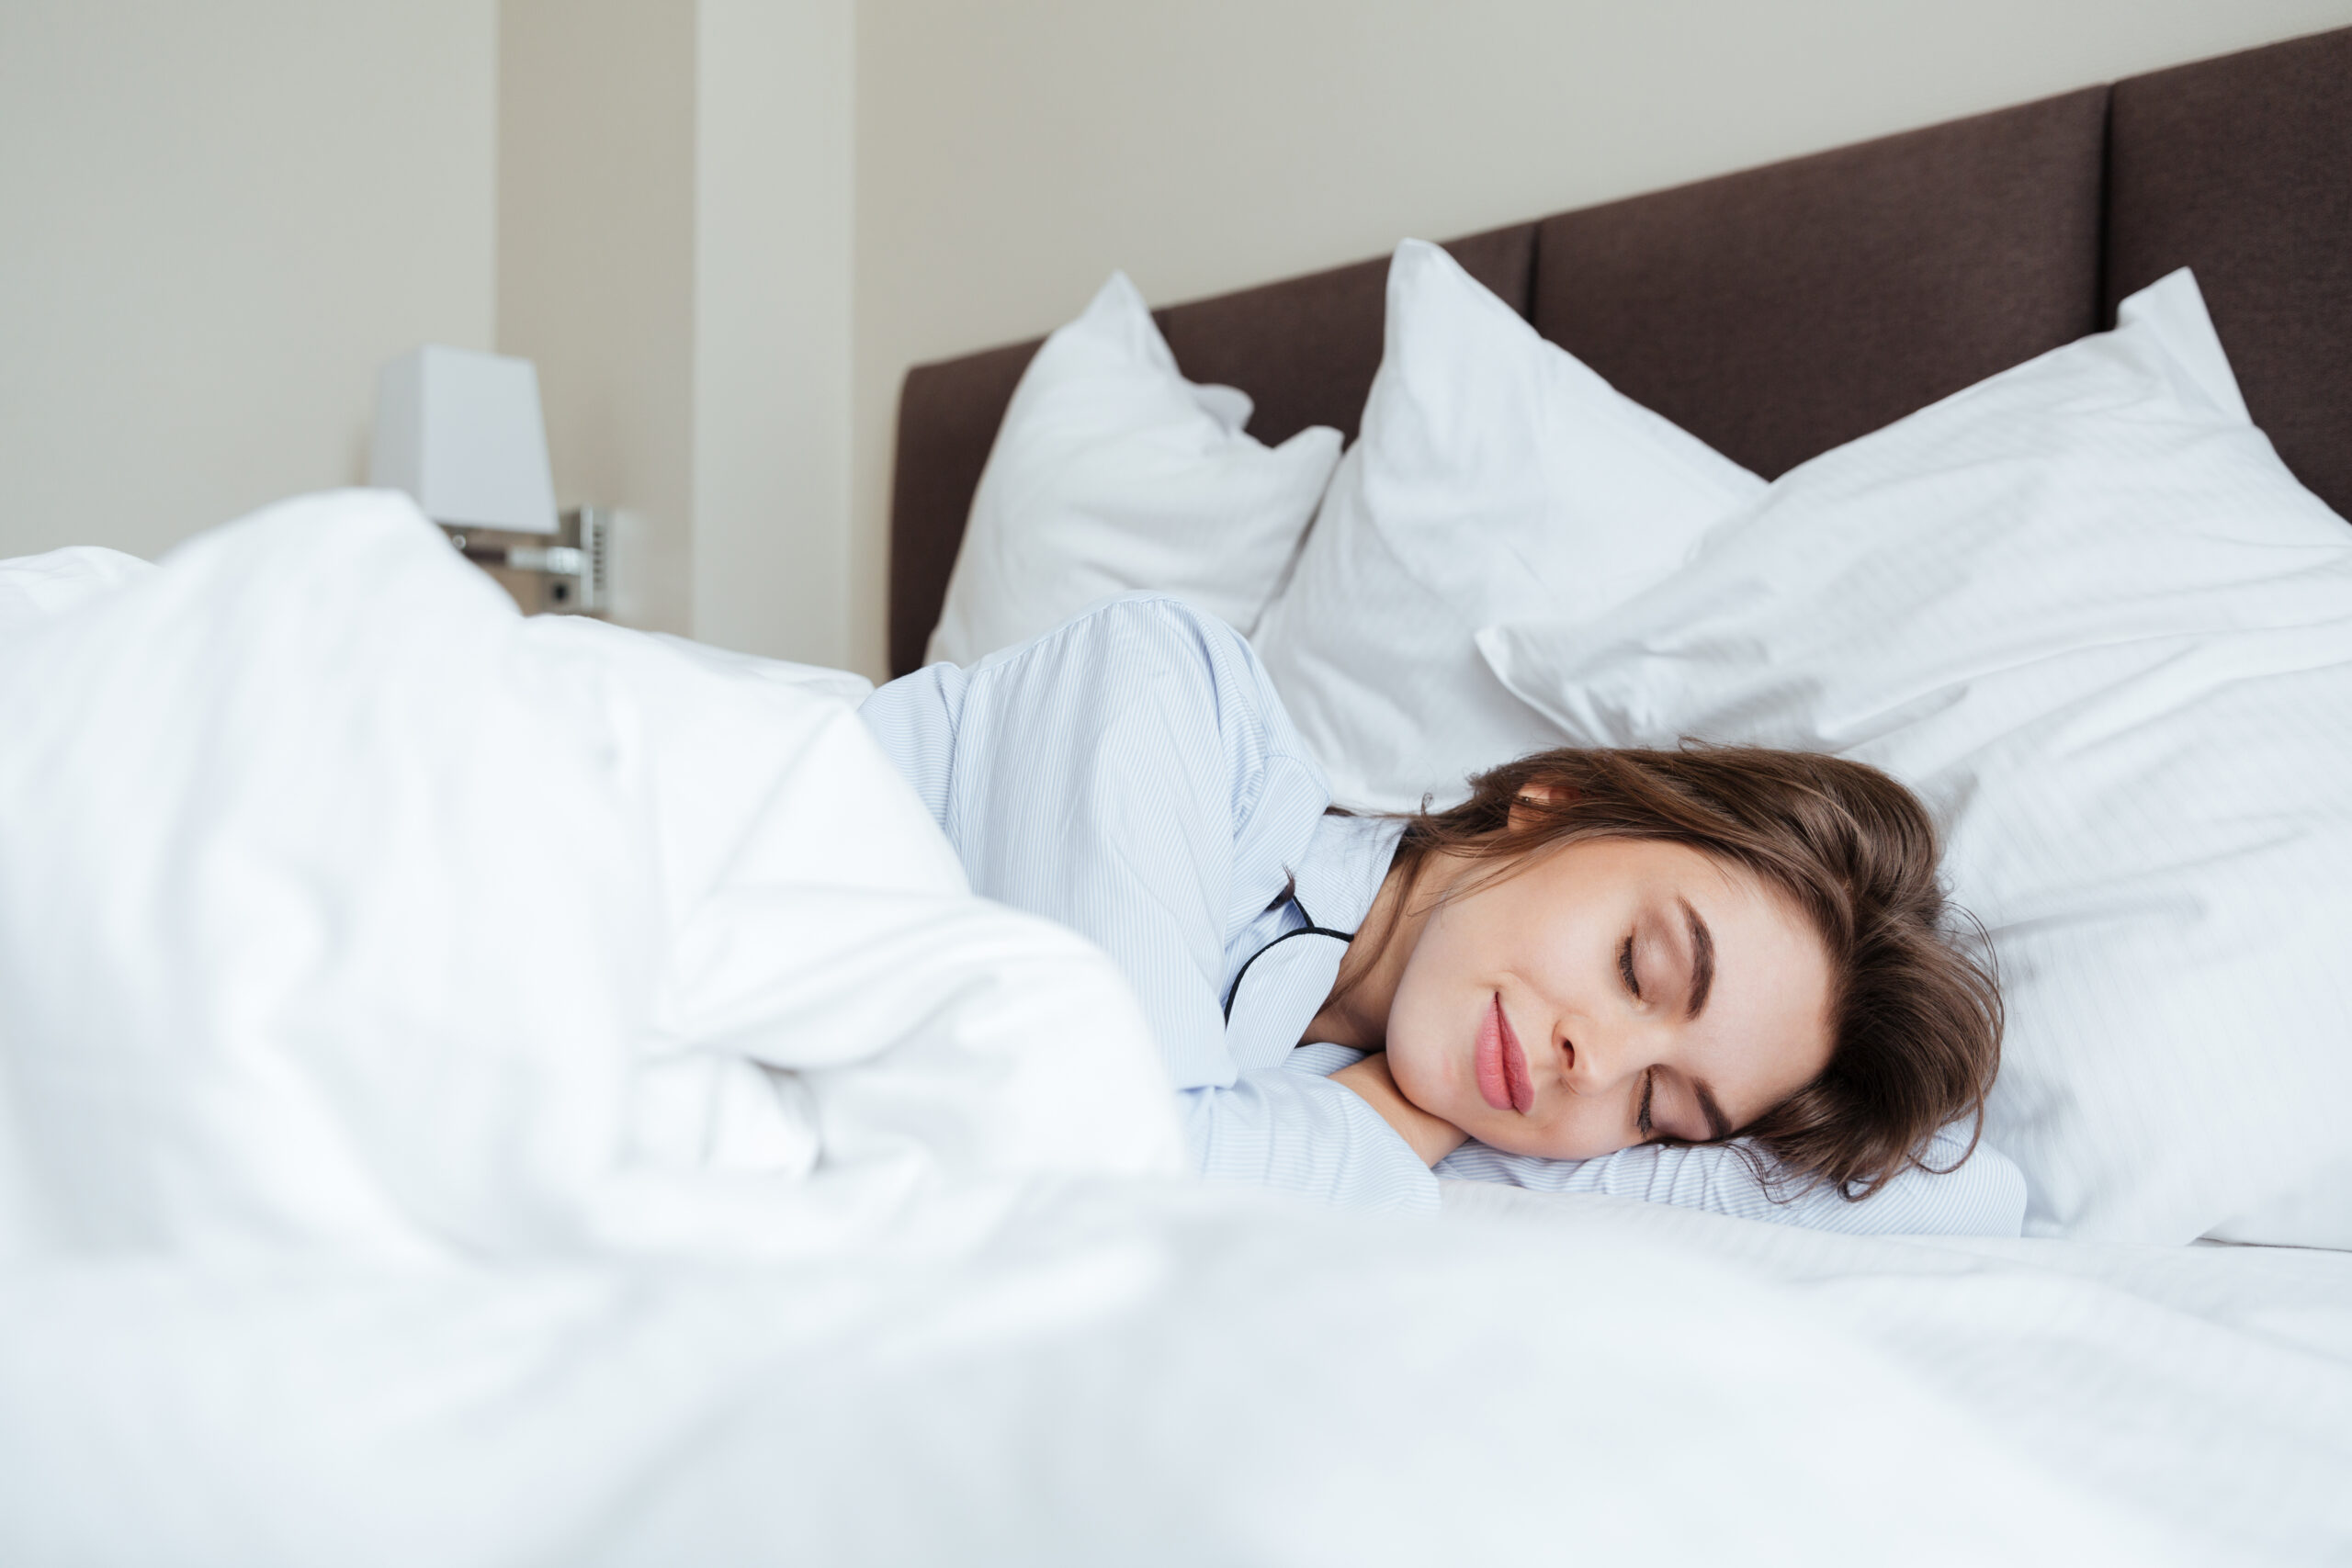 REM Sleep: What Is, Brain Waves, How to Sleep Better?